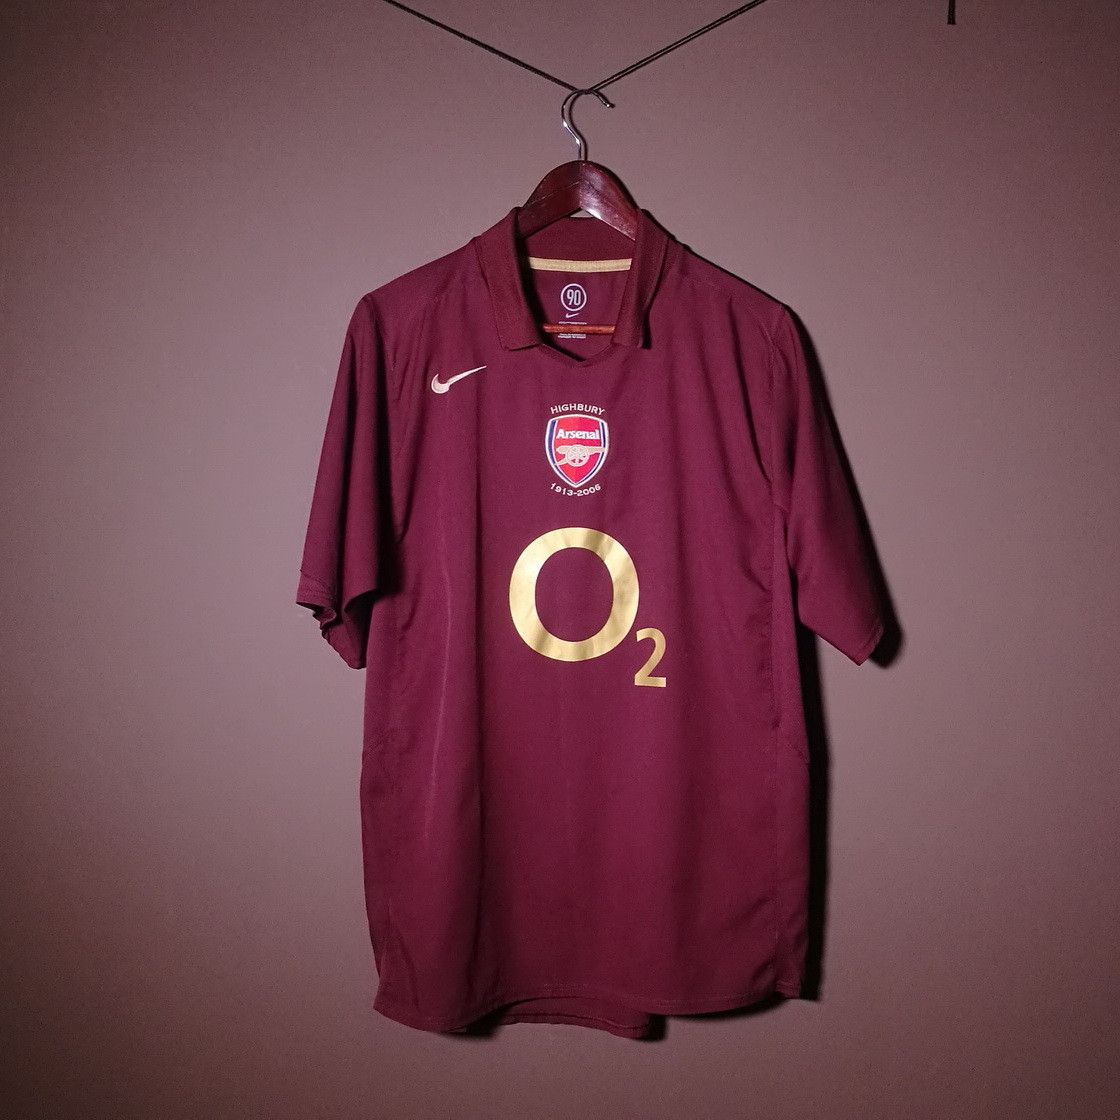 Nike Nike O2 Arsenal Football Shirt 90 L Highbury anniversary | Grailed